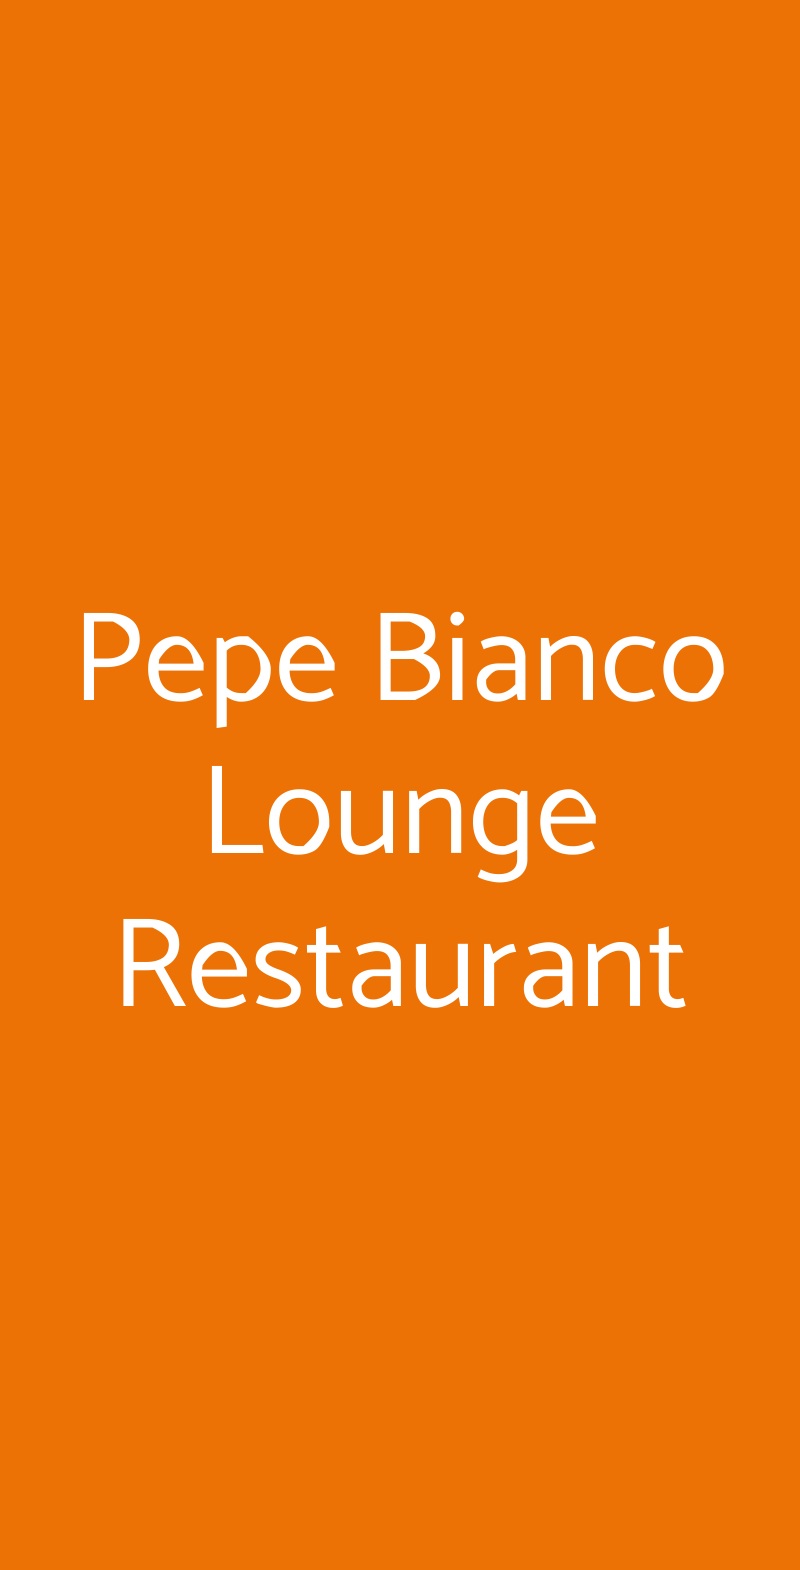 Pepe Bianco Lounge Restaurant Reggio Emilia menù 1 pagina